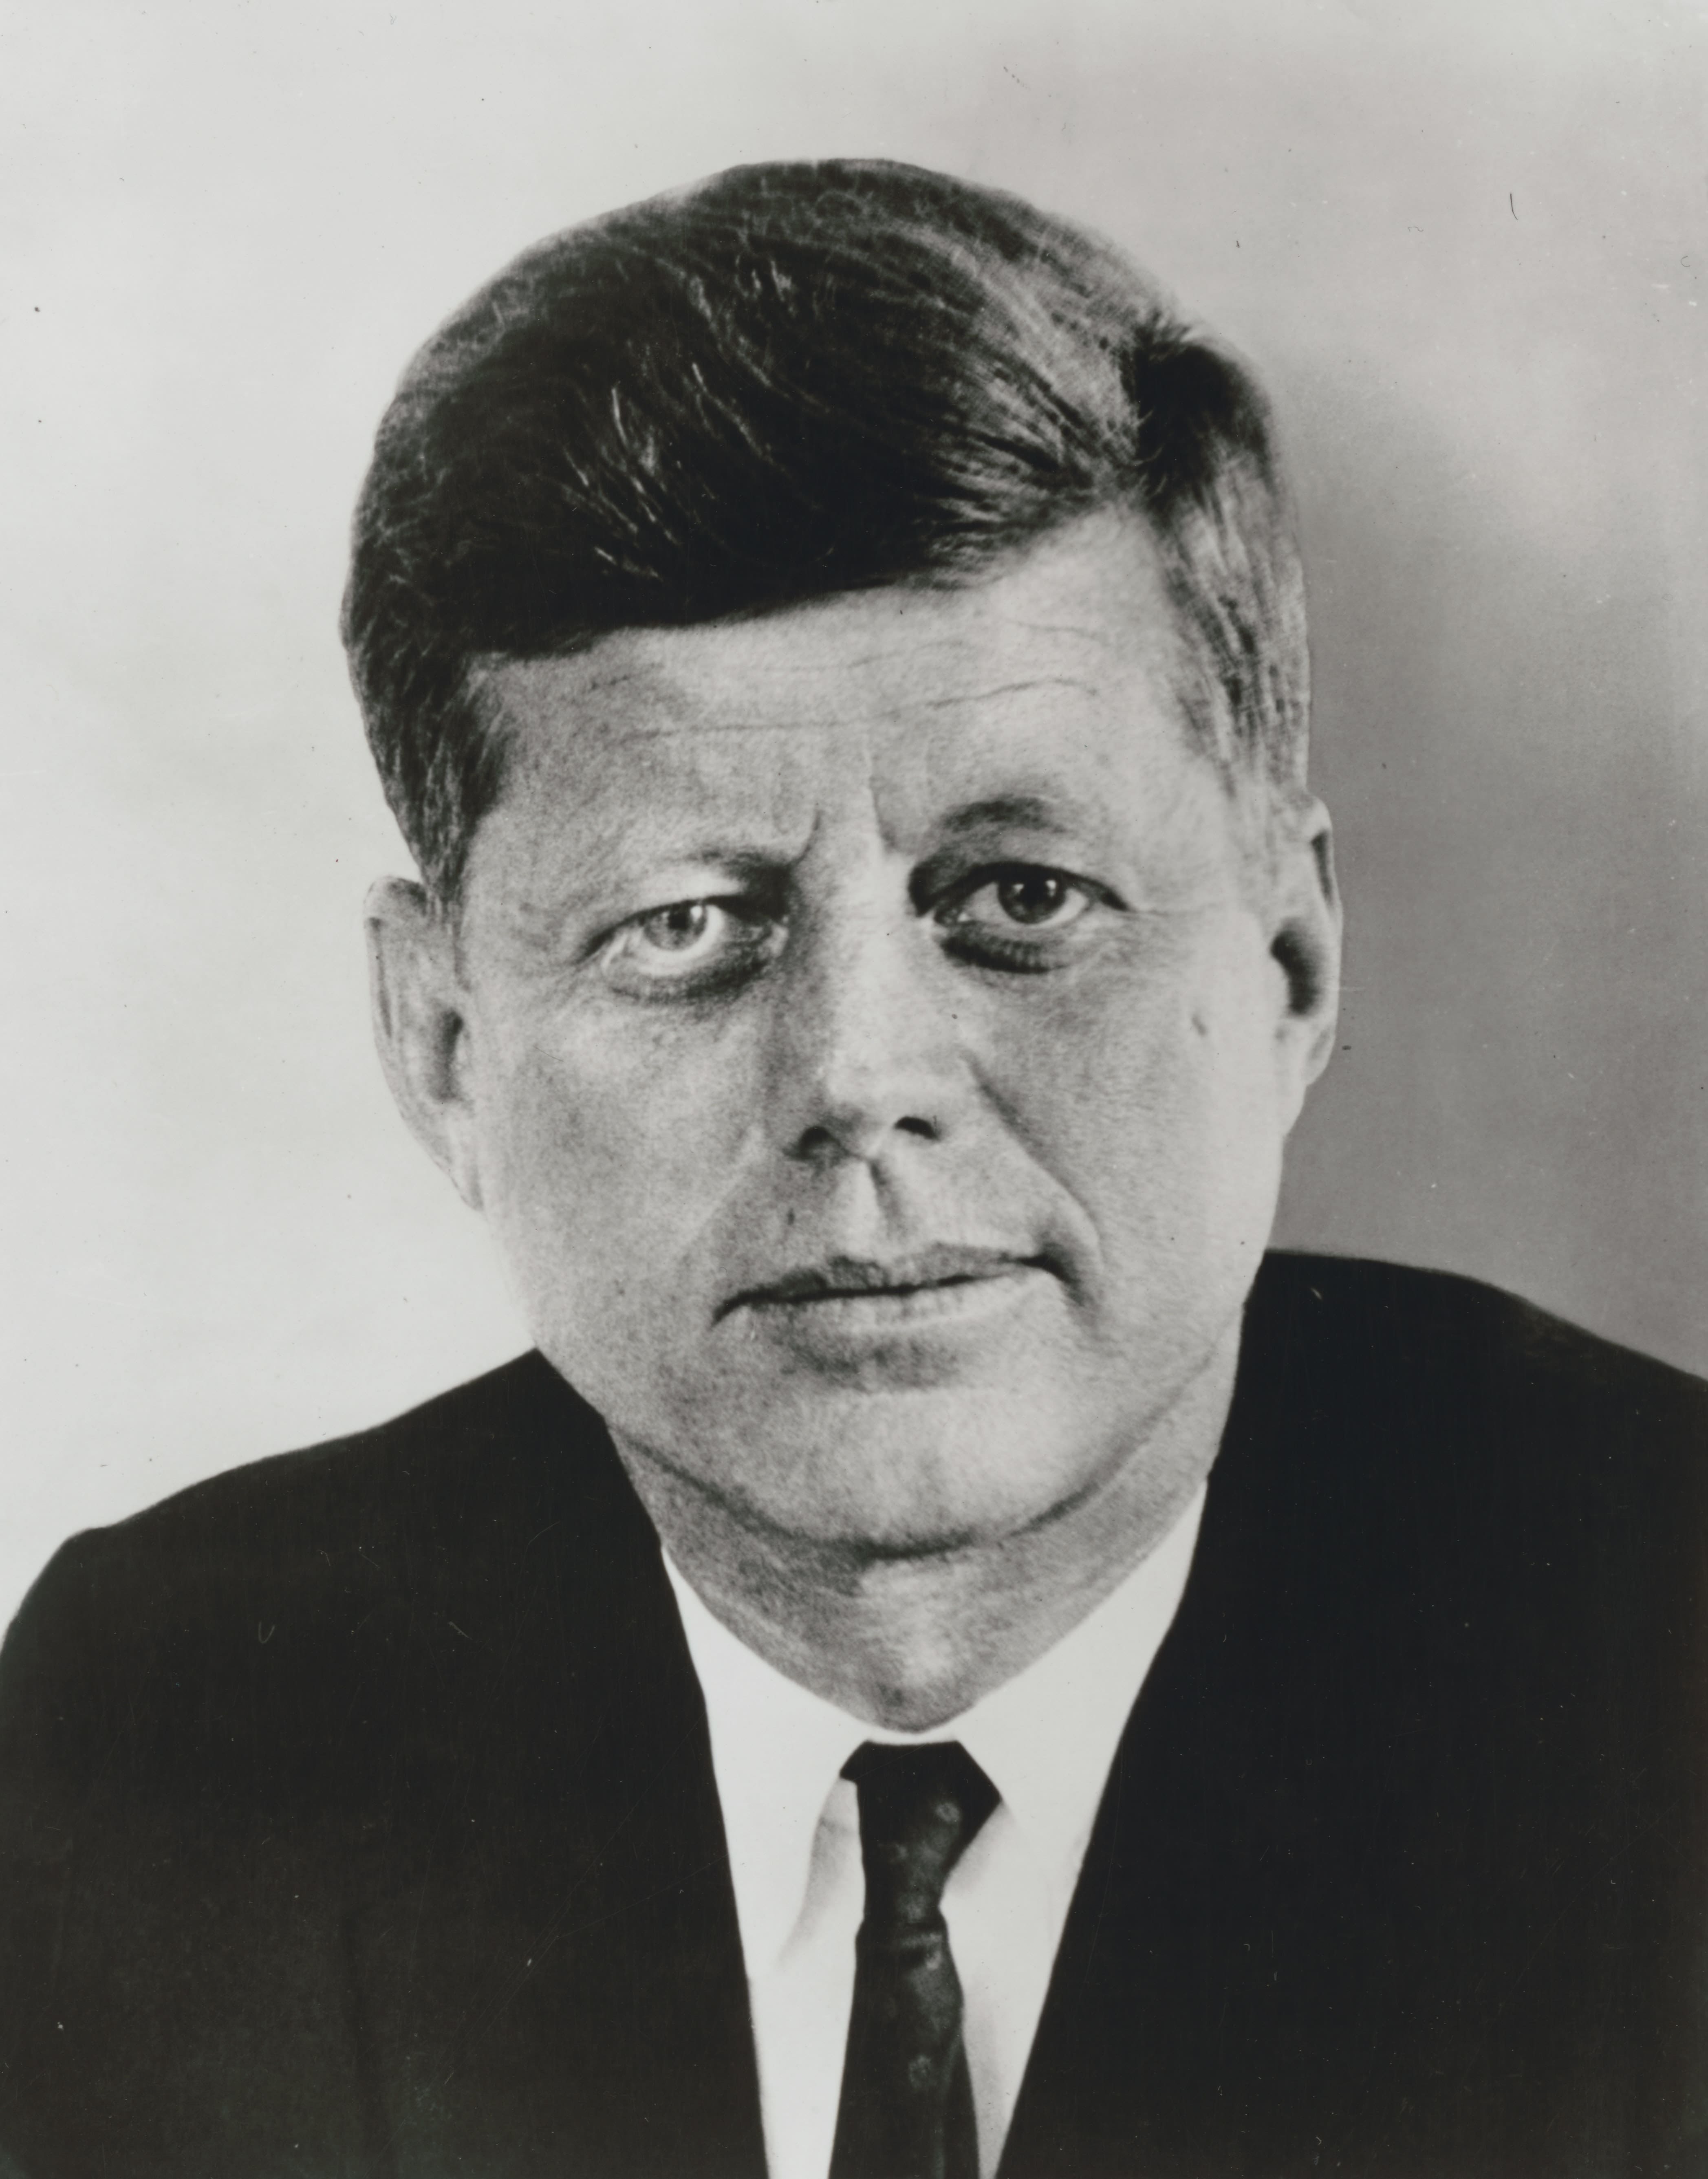 black and white photo of John F. Kennedy